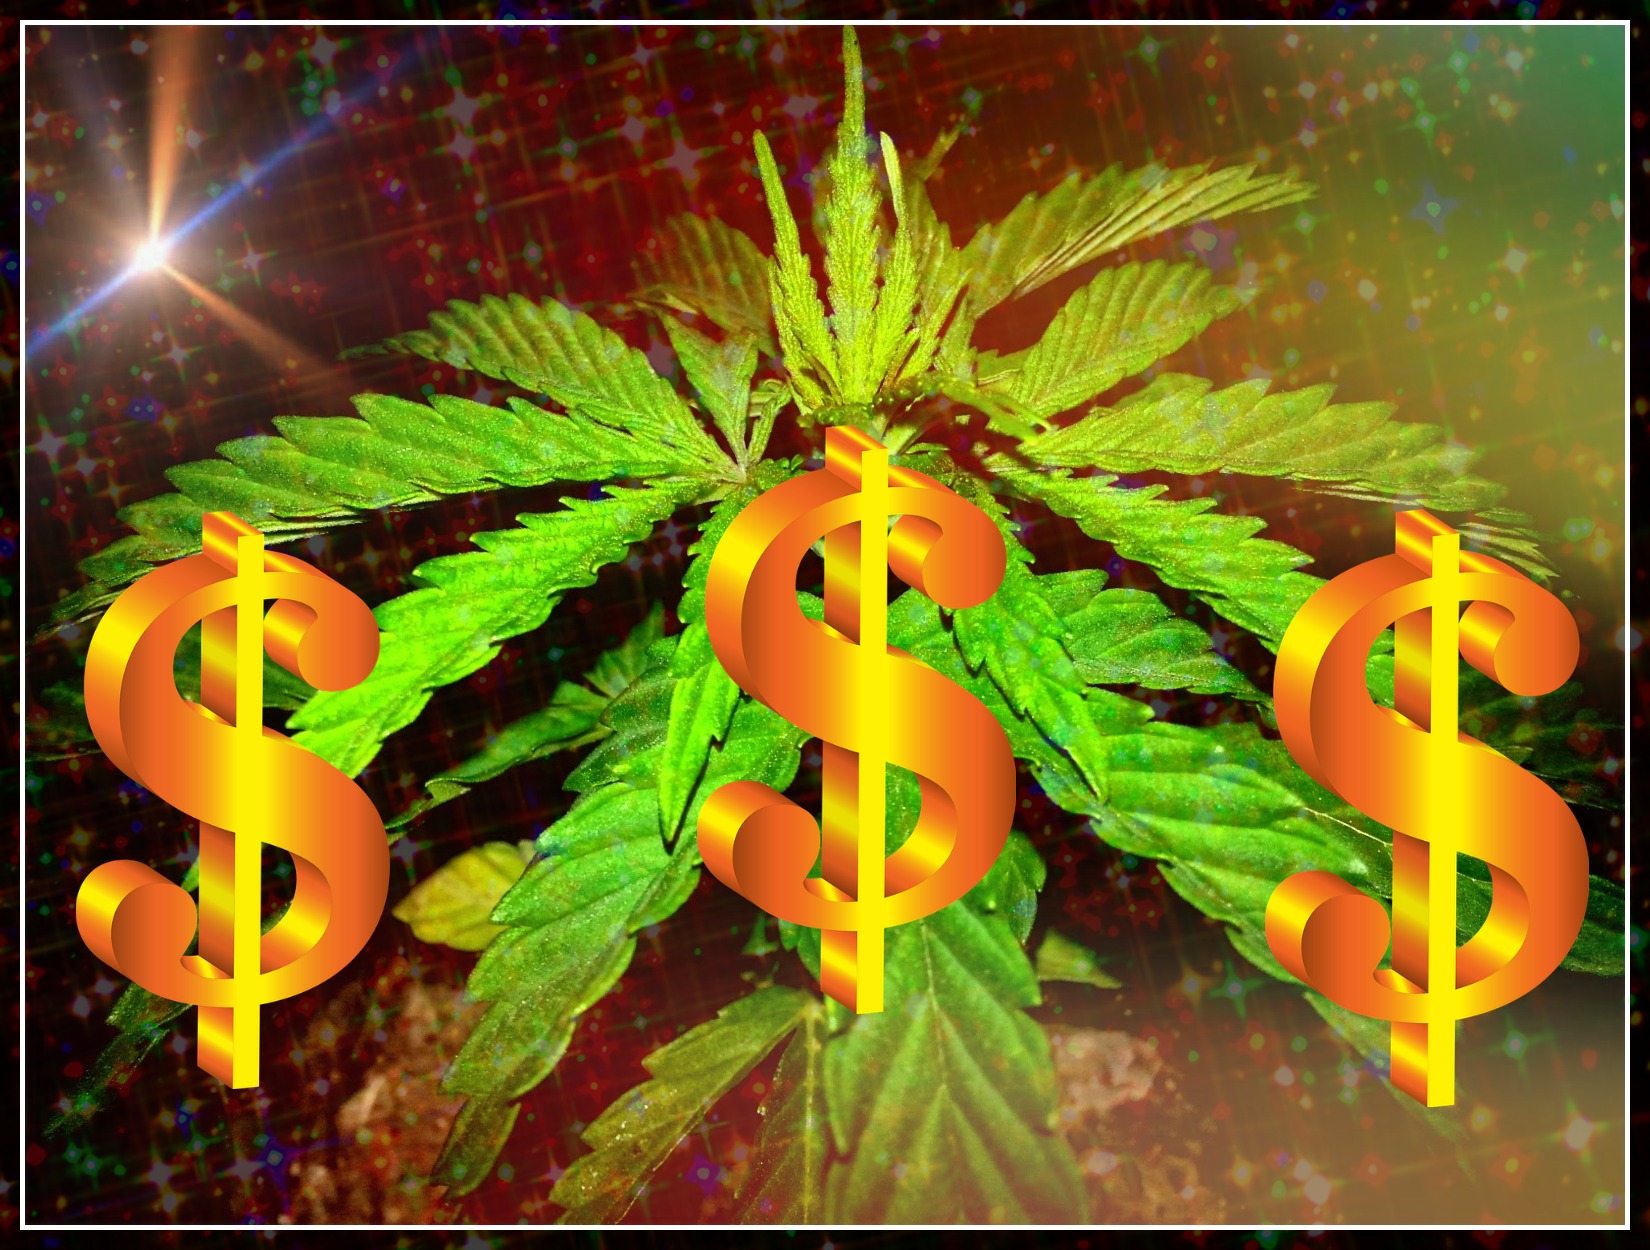 Canna-Lance-Cannabis-Is-Worth-Billions